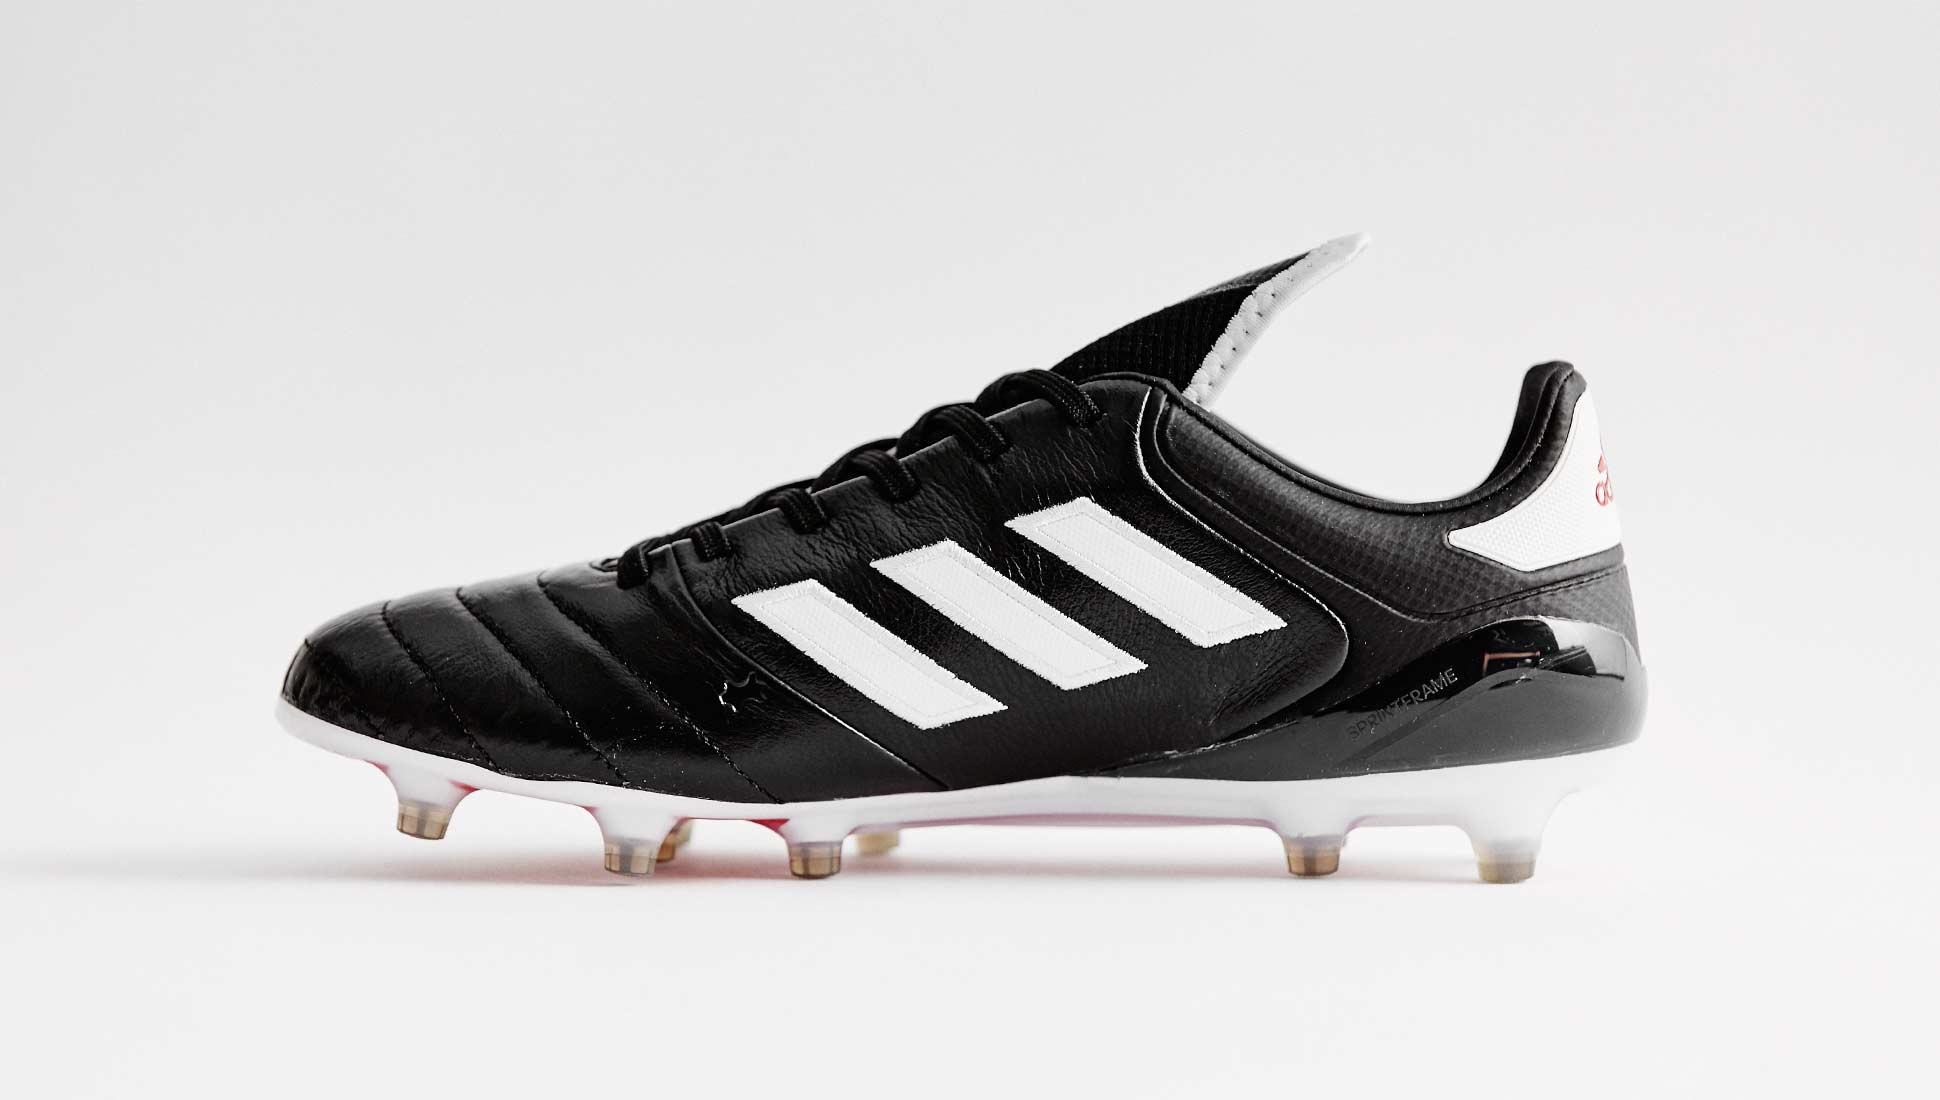 adidas COPA 17.1 Football Boots - SoccerBible